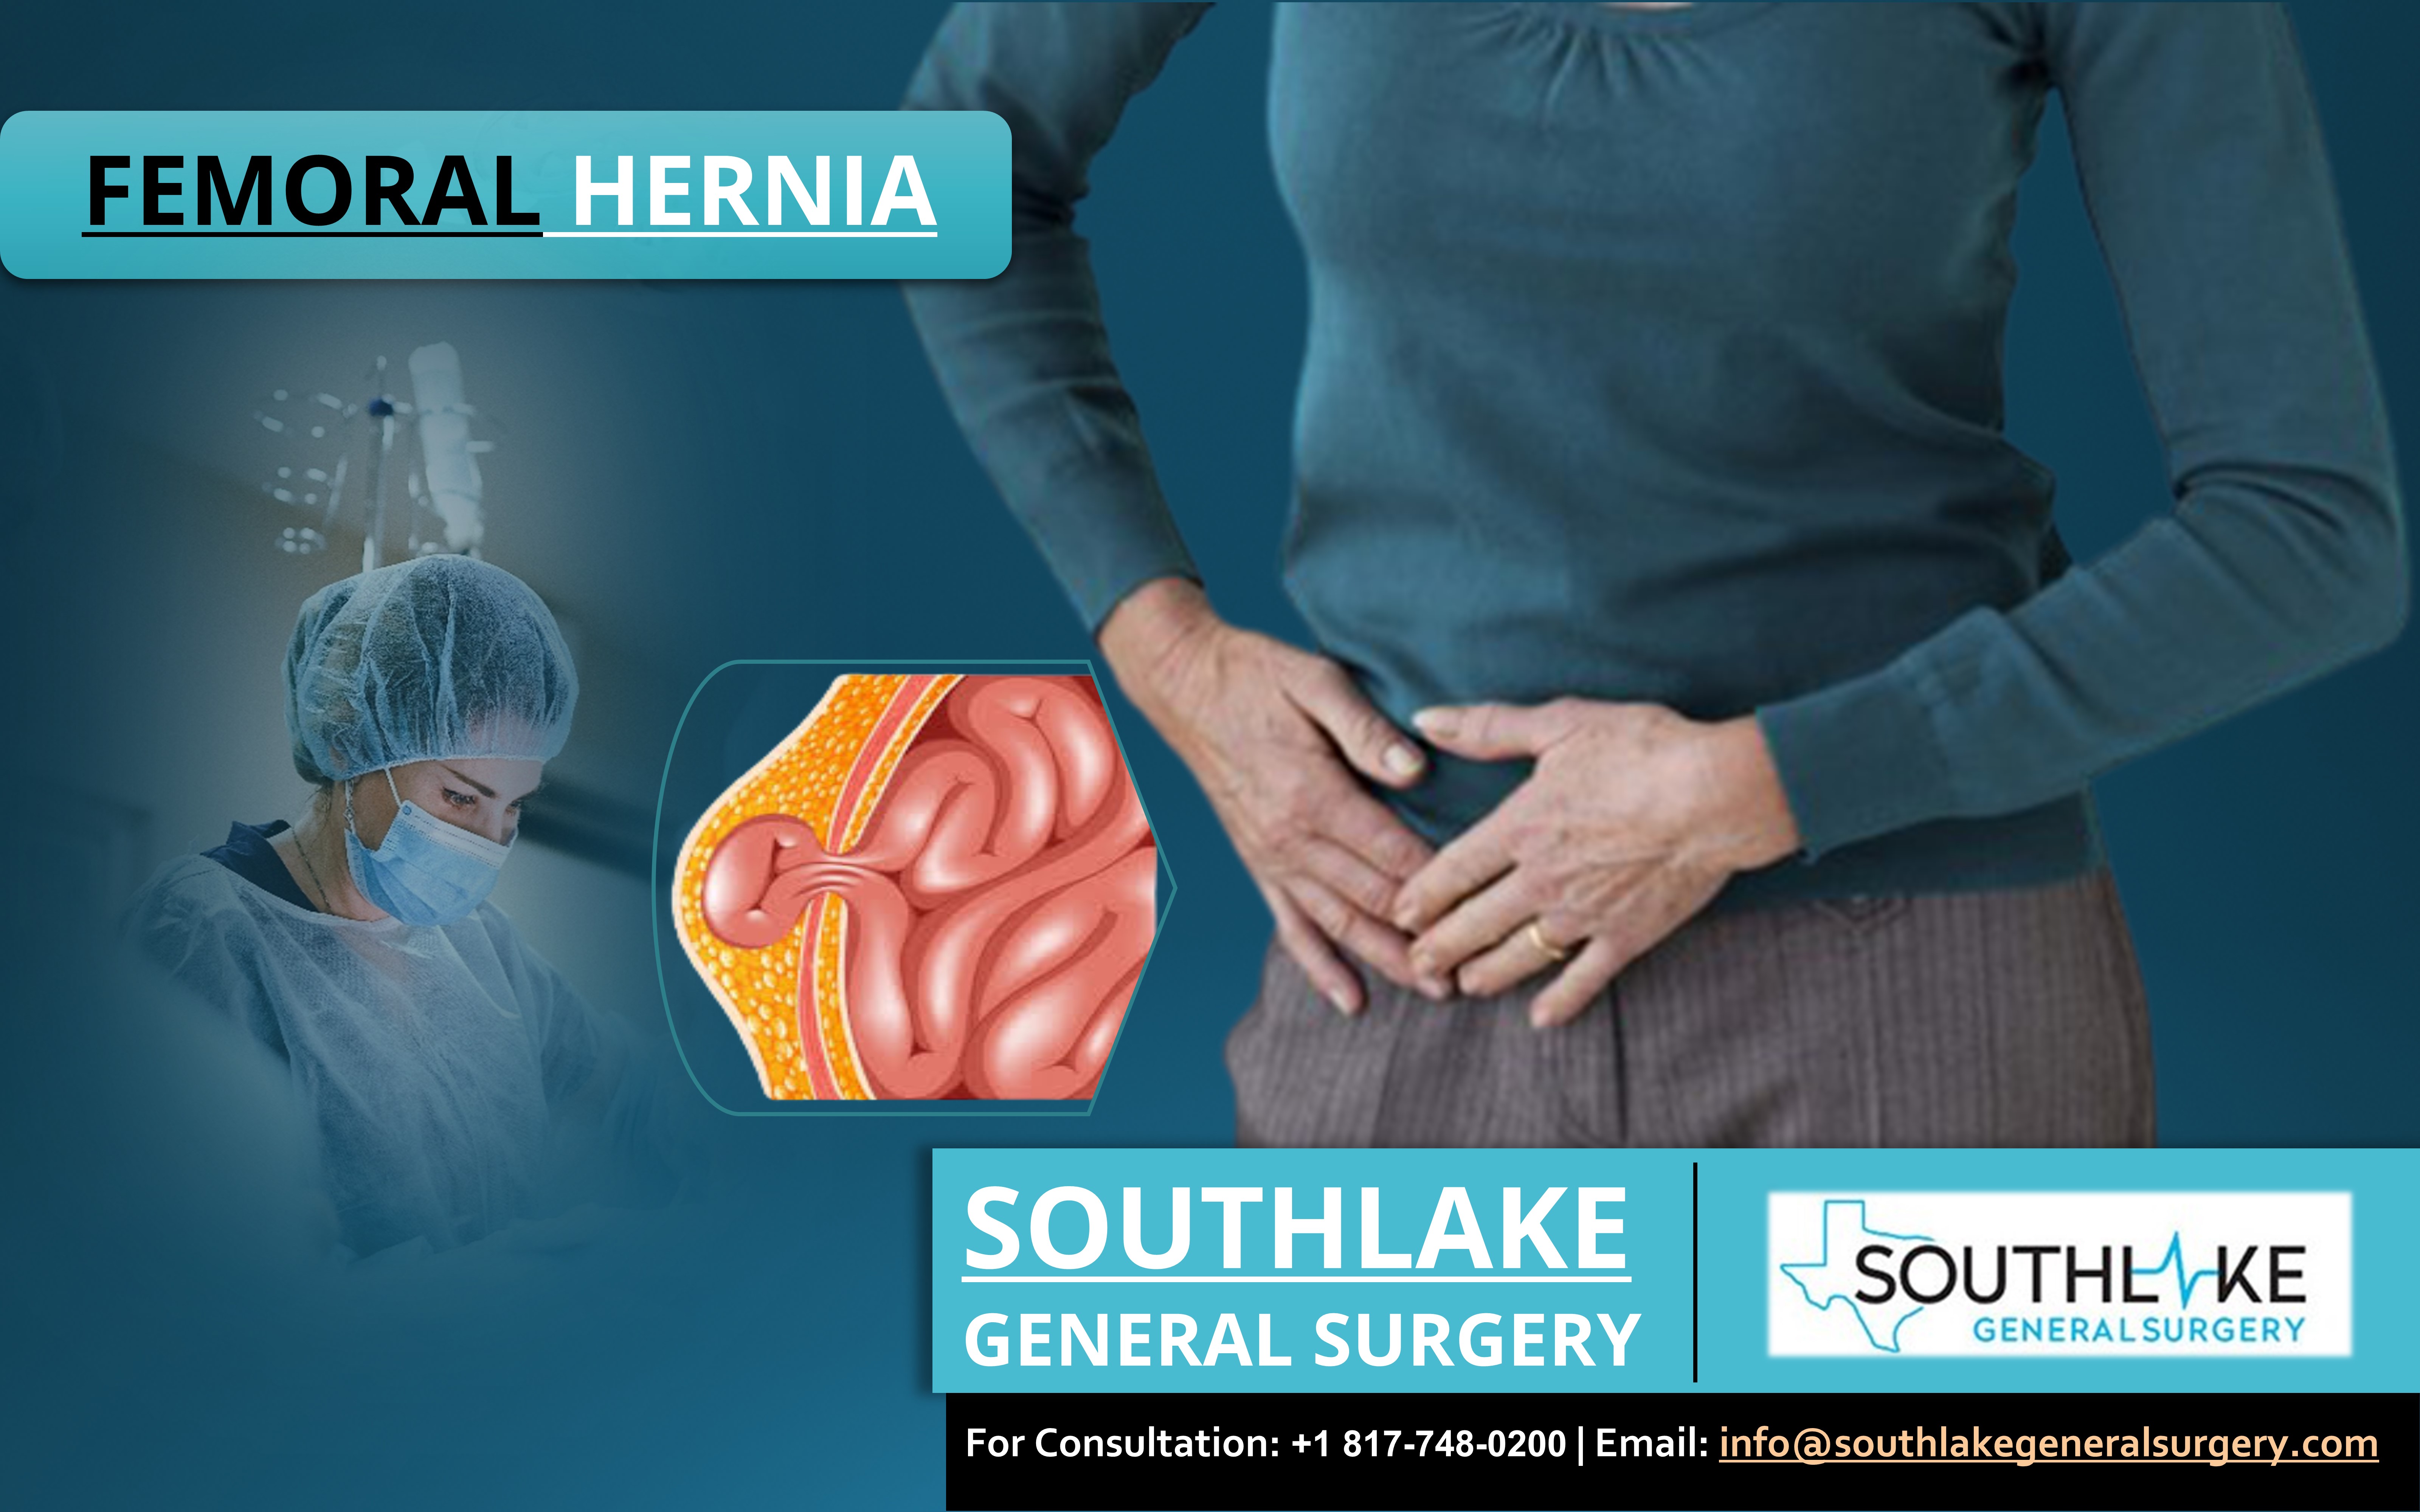 https://www.southlakegeneralsurgery.com/wp-content/uploads/2021/08/Femoral-Hernia-Surgery-at-Southlake-General-Surgery.jpg